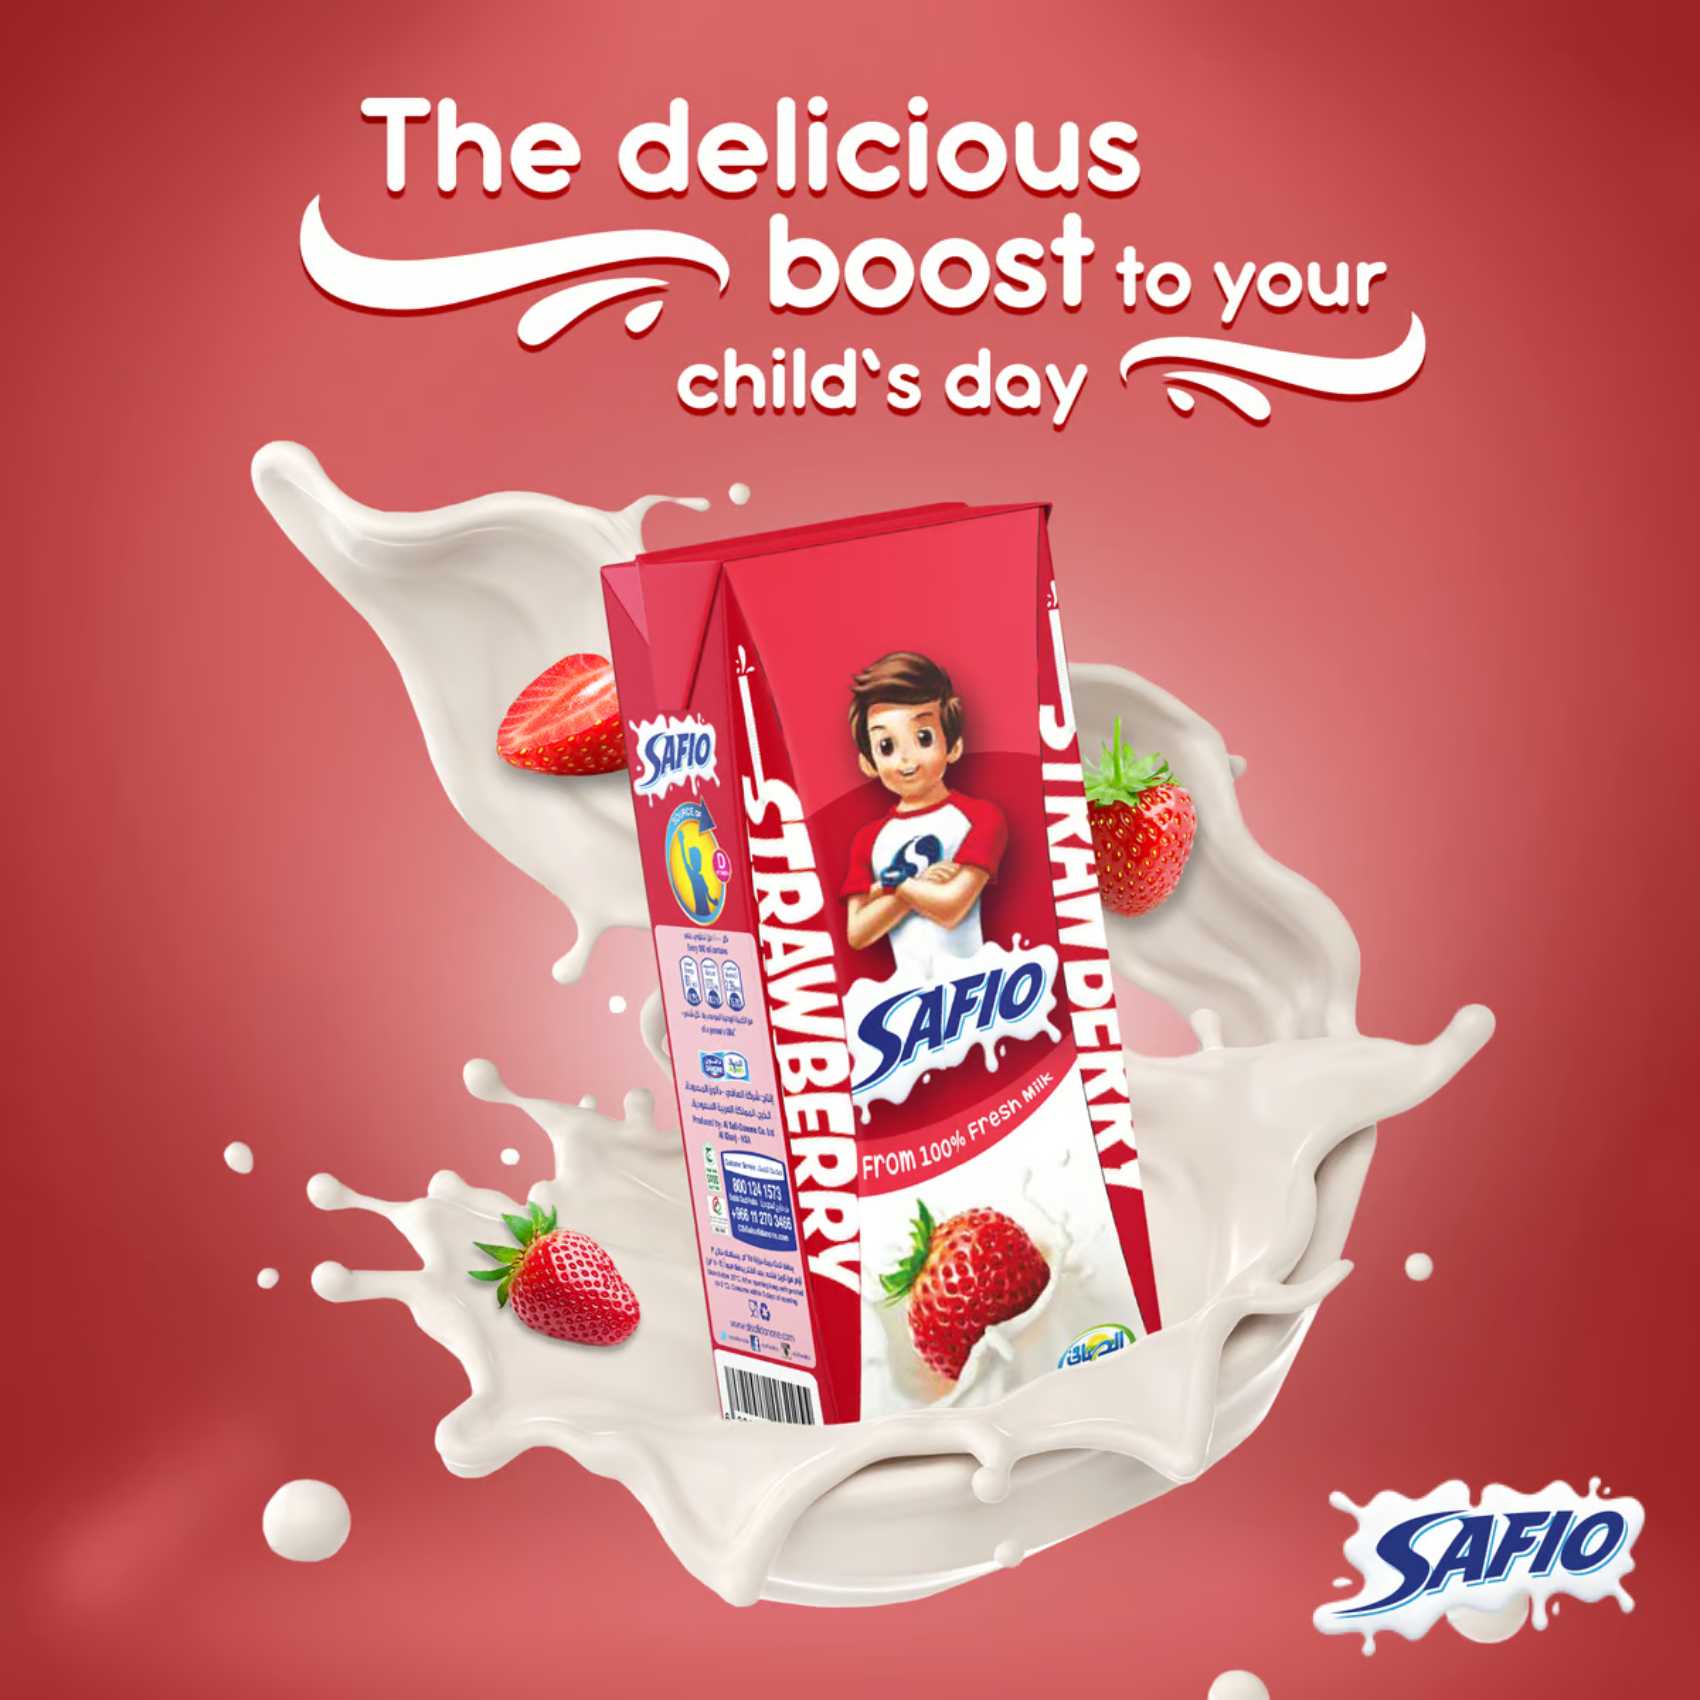 Safio Strawberry UHT Milk 185ml Pack of 6